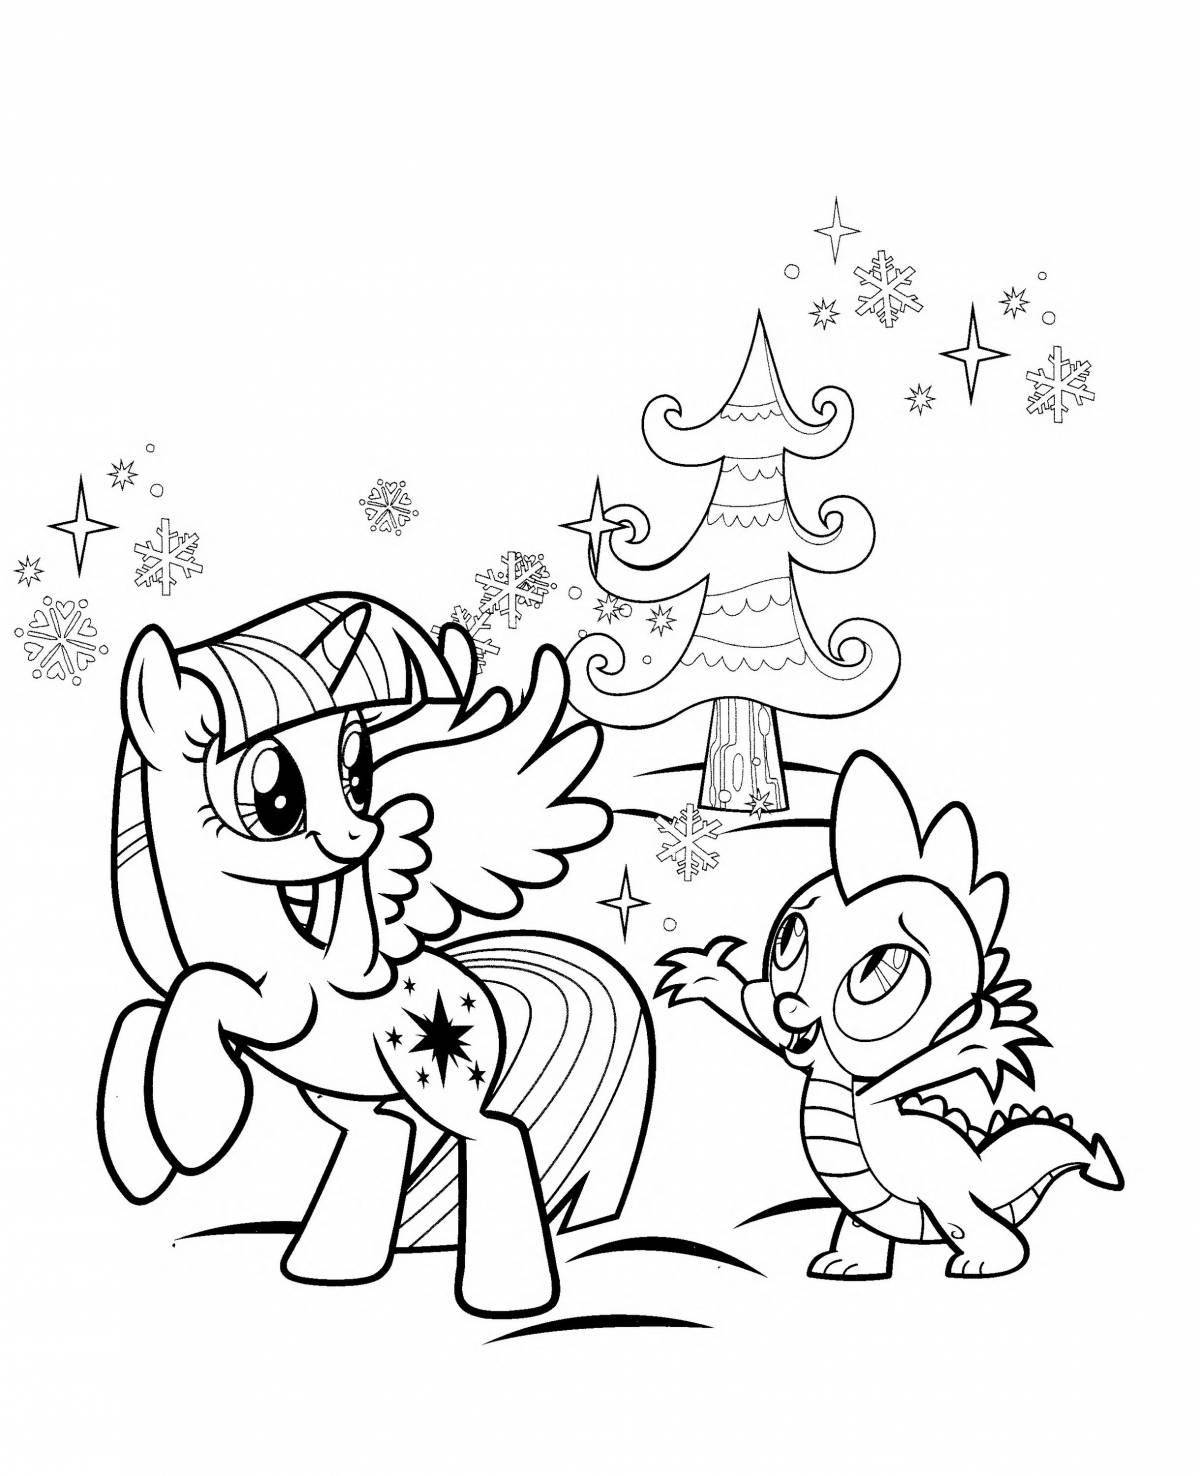 Fabulous Christmas pony coloring page